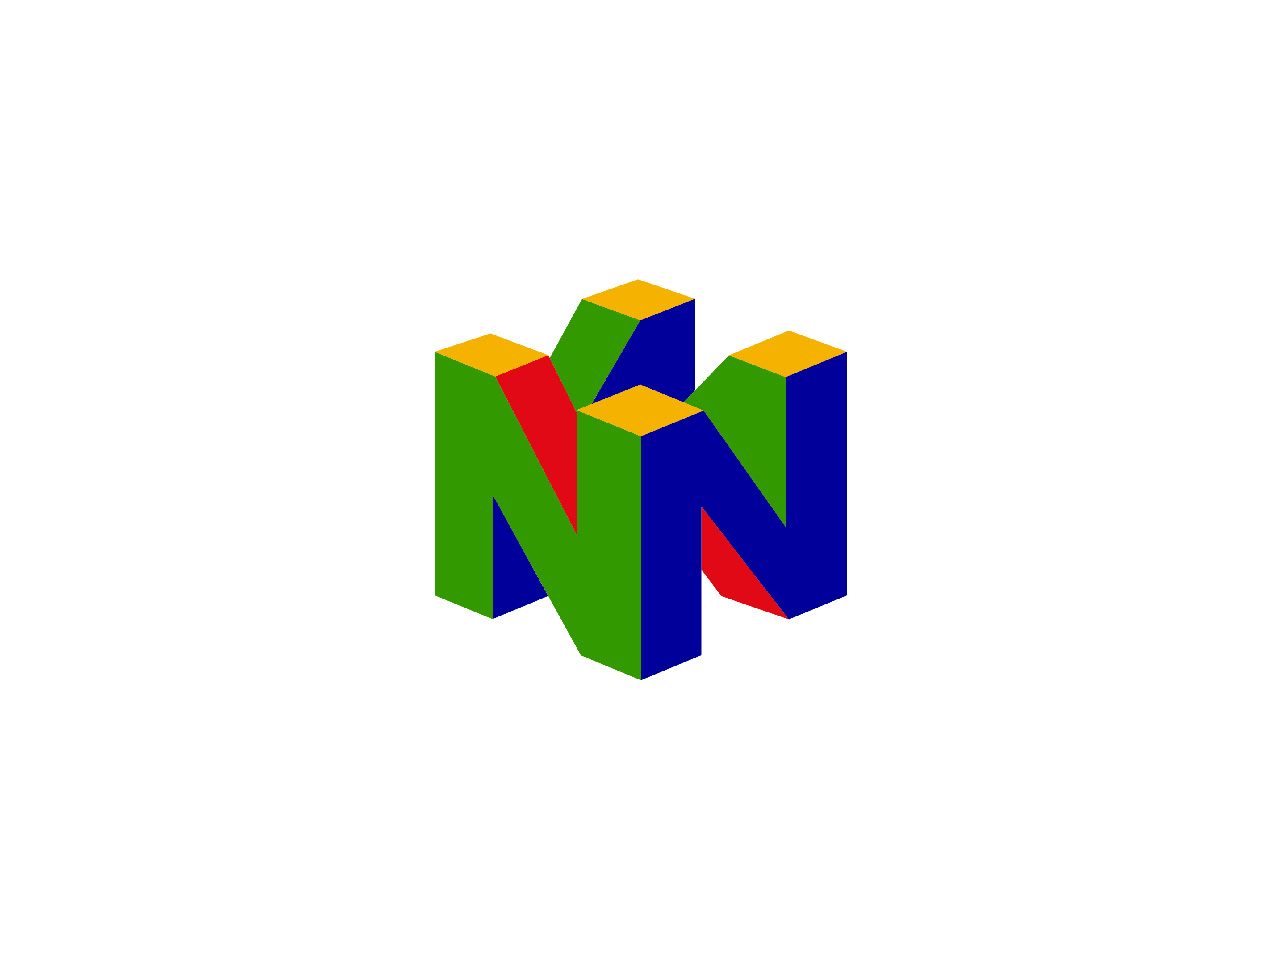 Nintendo 64 Logo